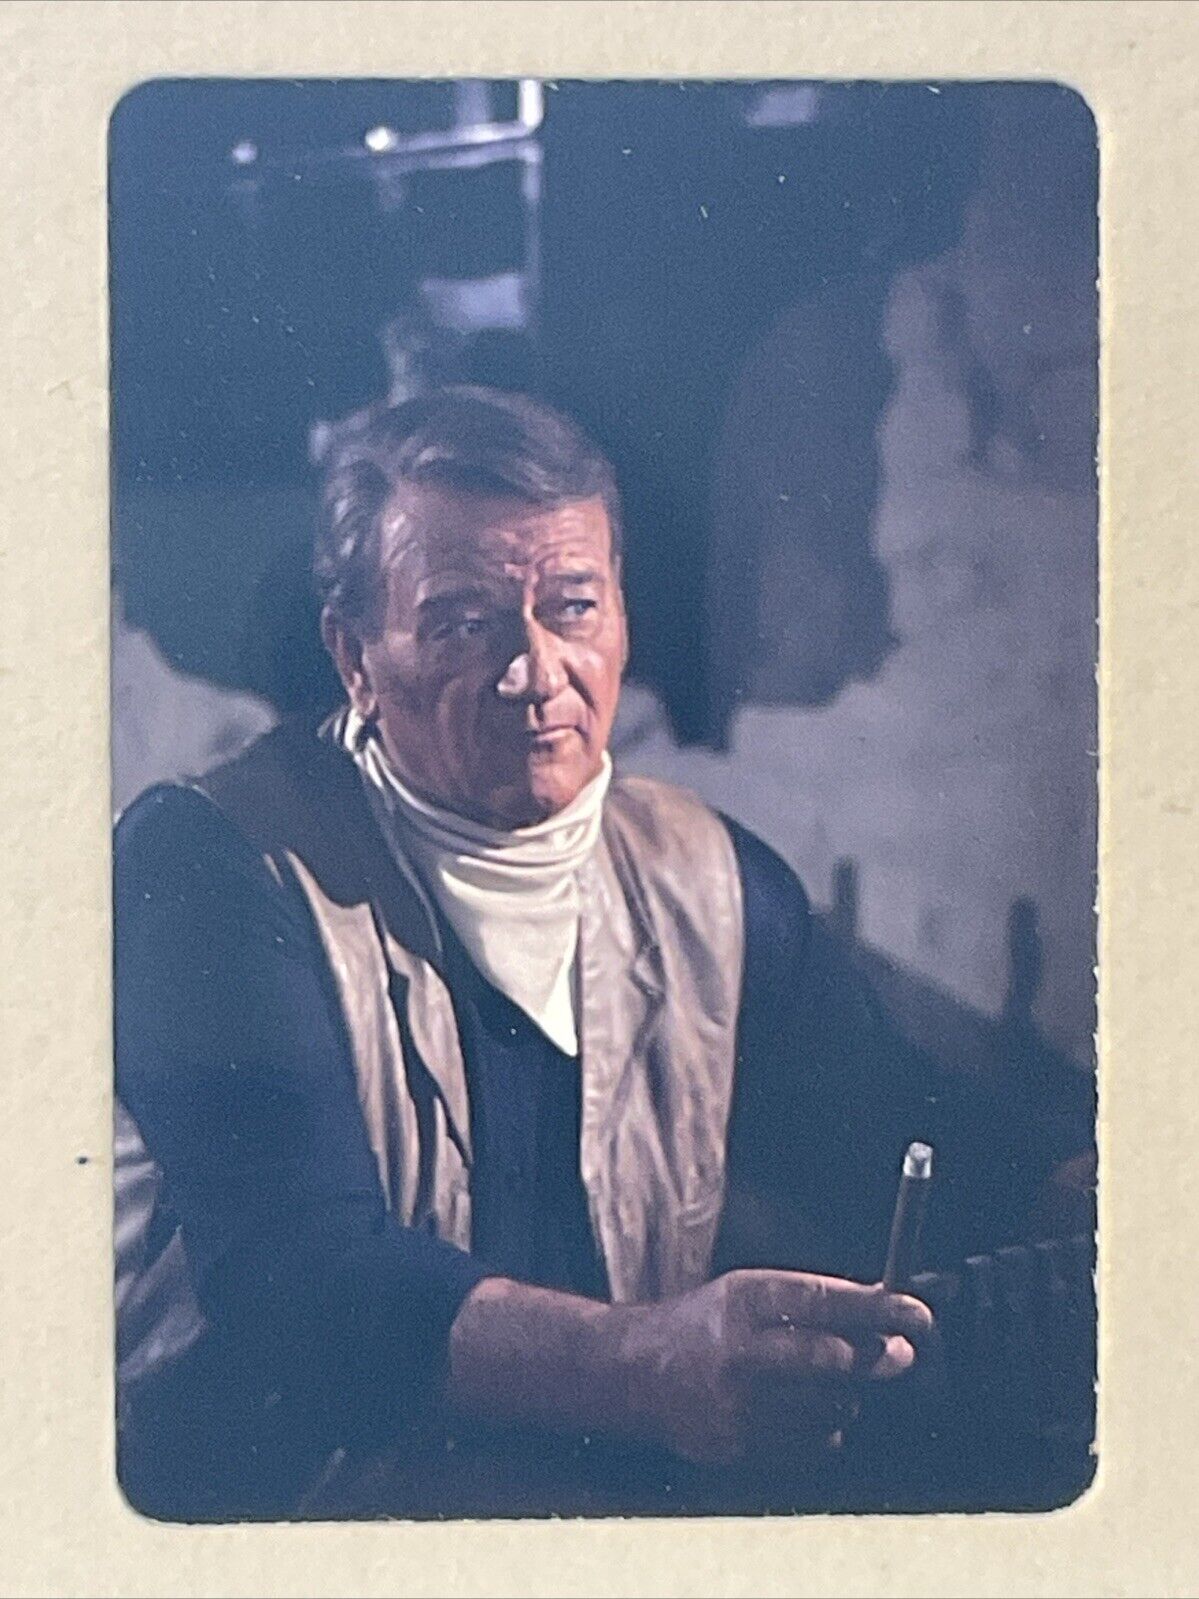 CHISUM John Wayne The Duke 35mm Transparency Color Slide